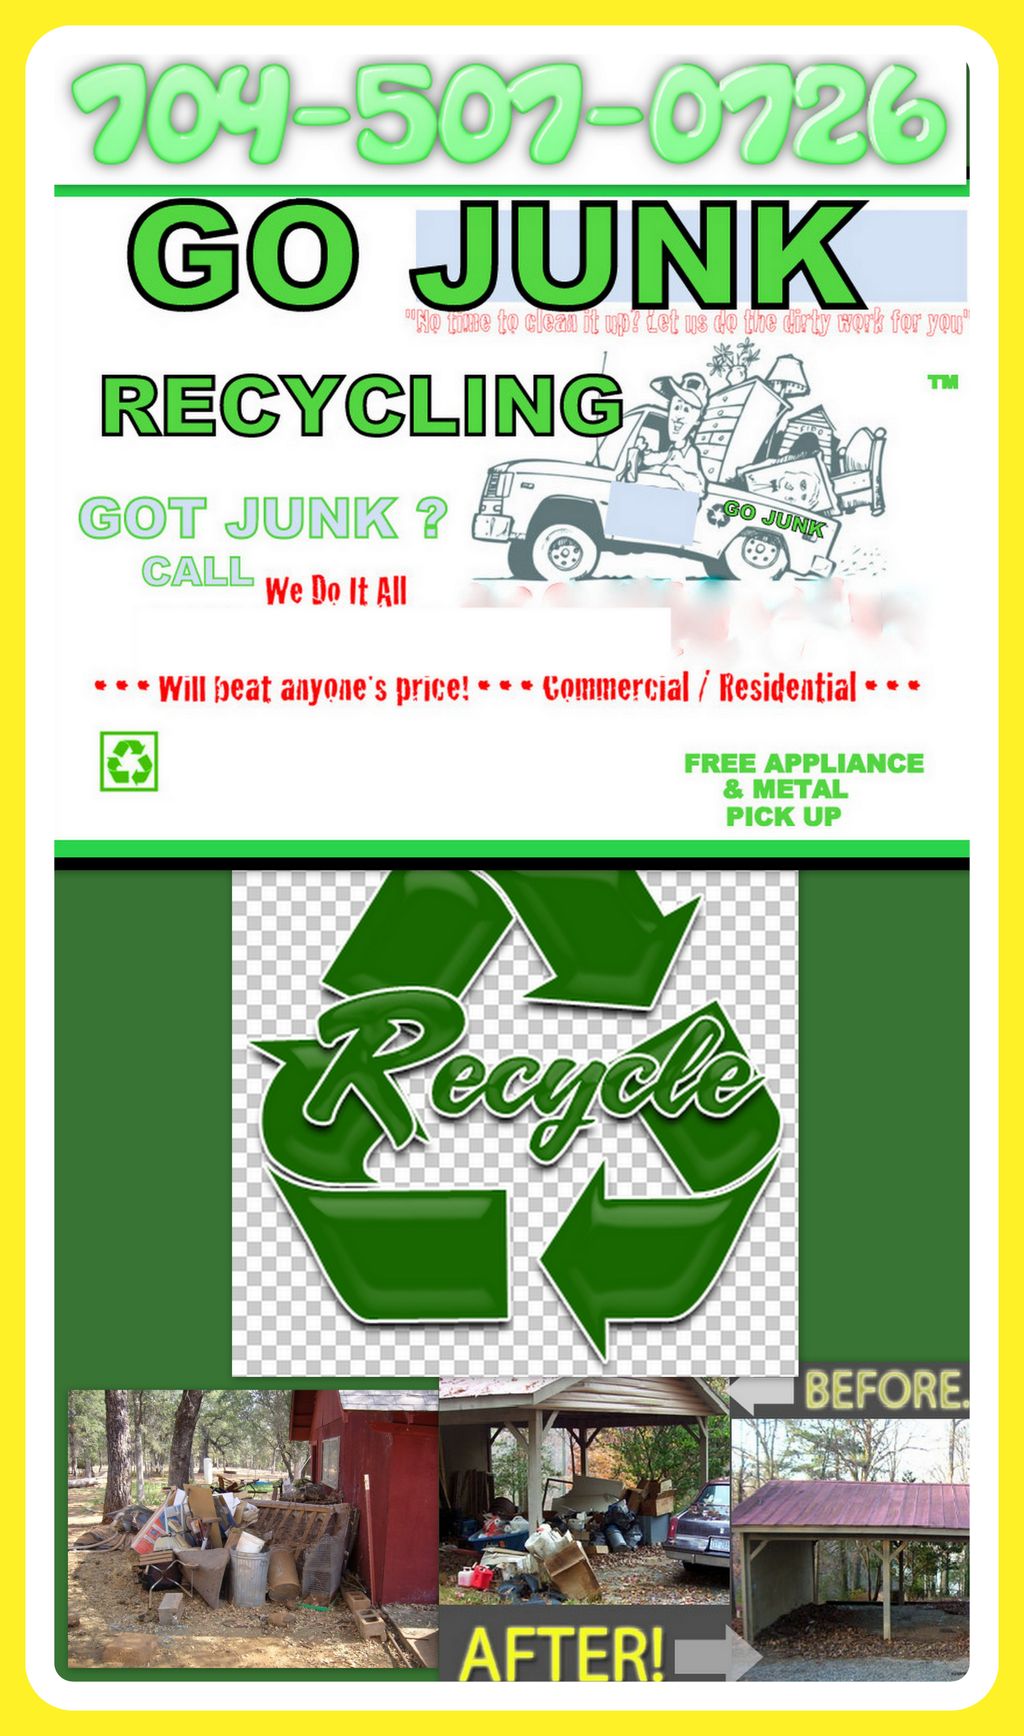 Go Junk Recycling